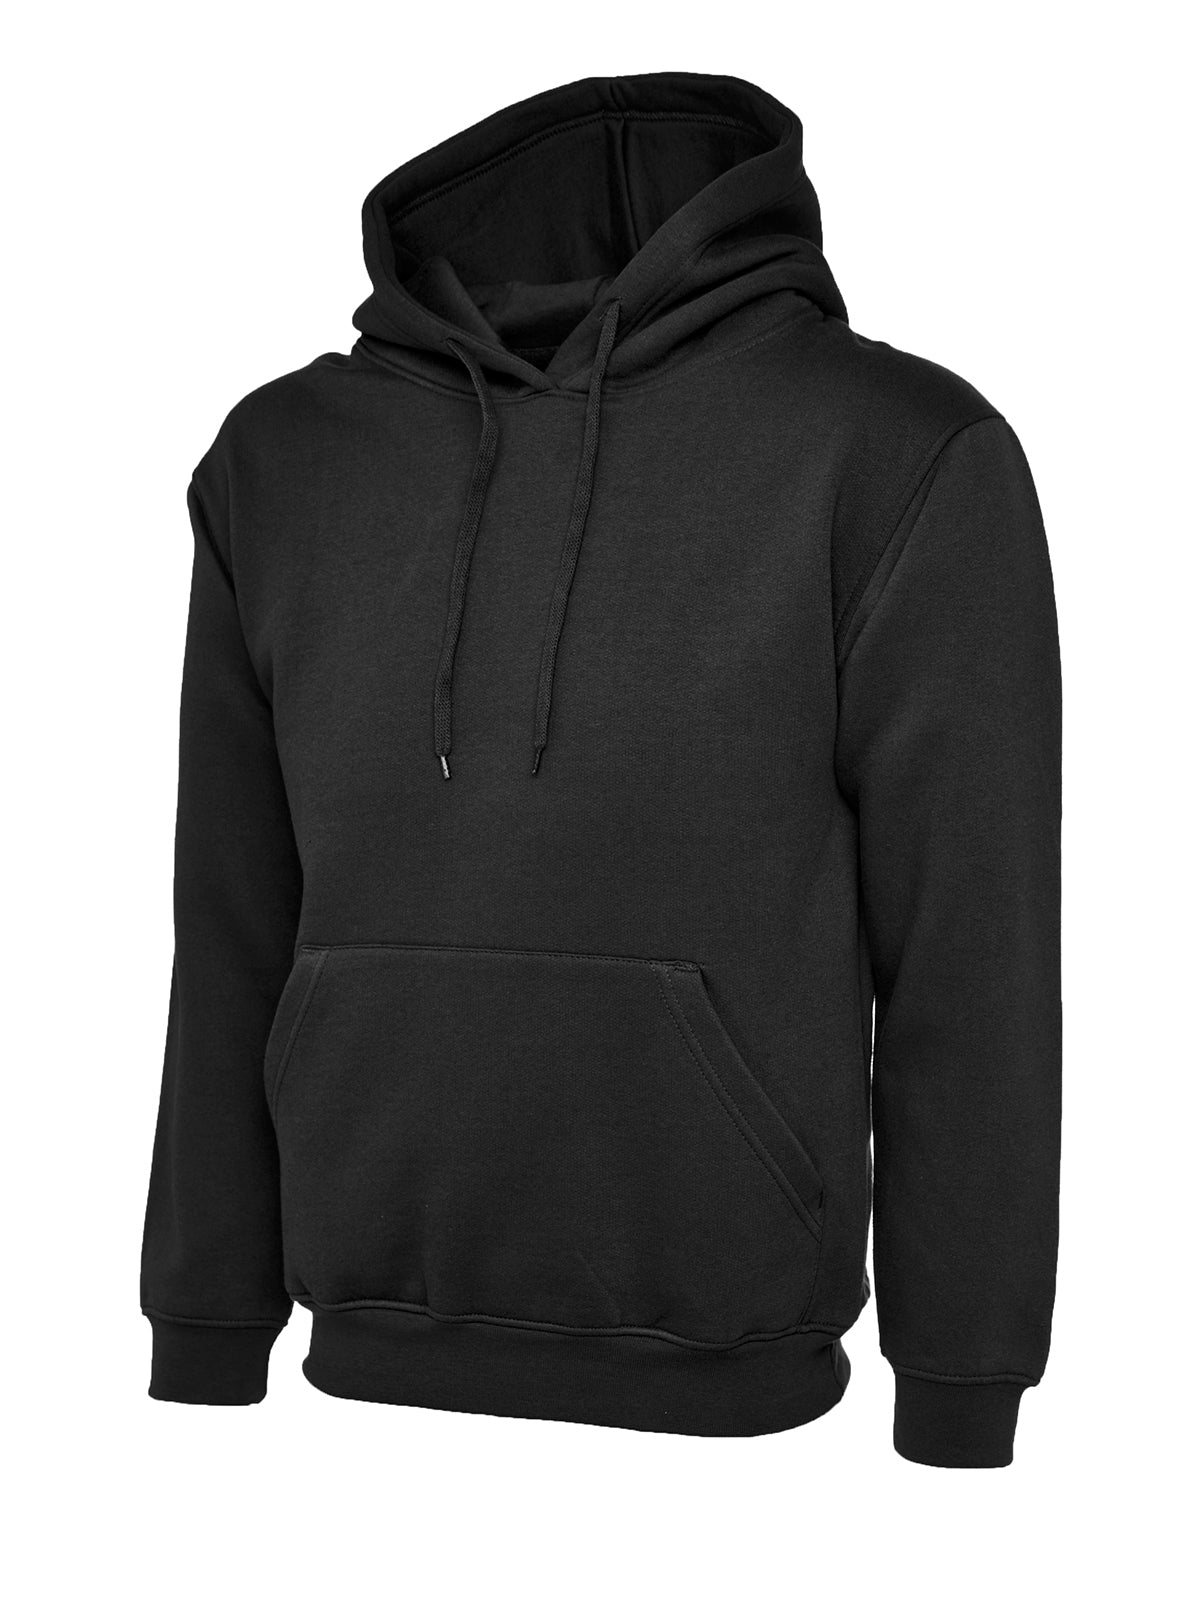 UC501 Premium Hooded Sweatshirt - I Want Workwear